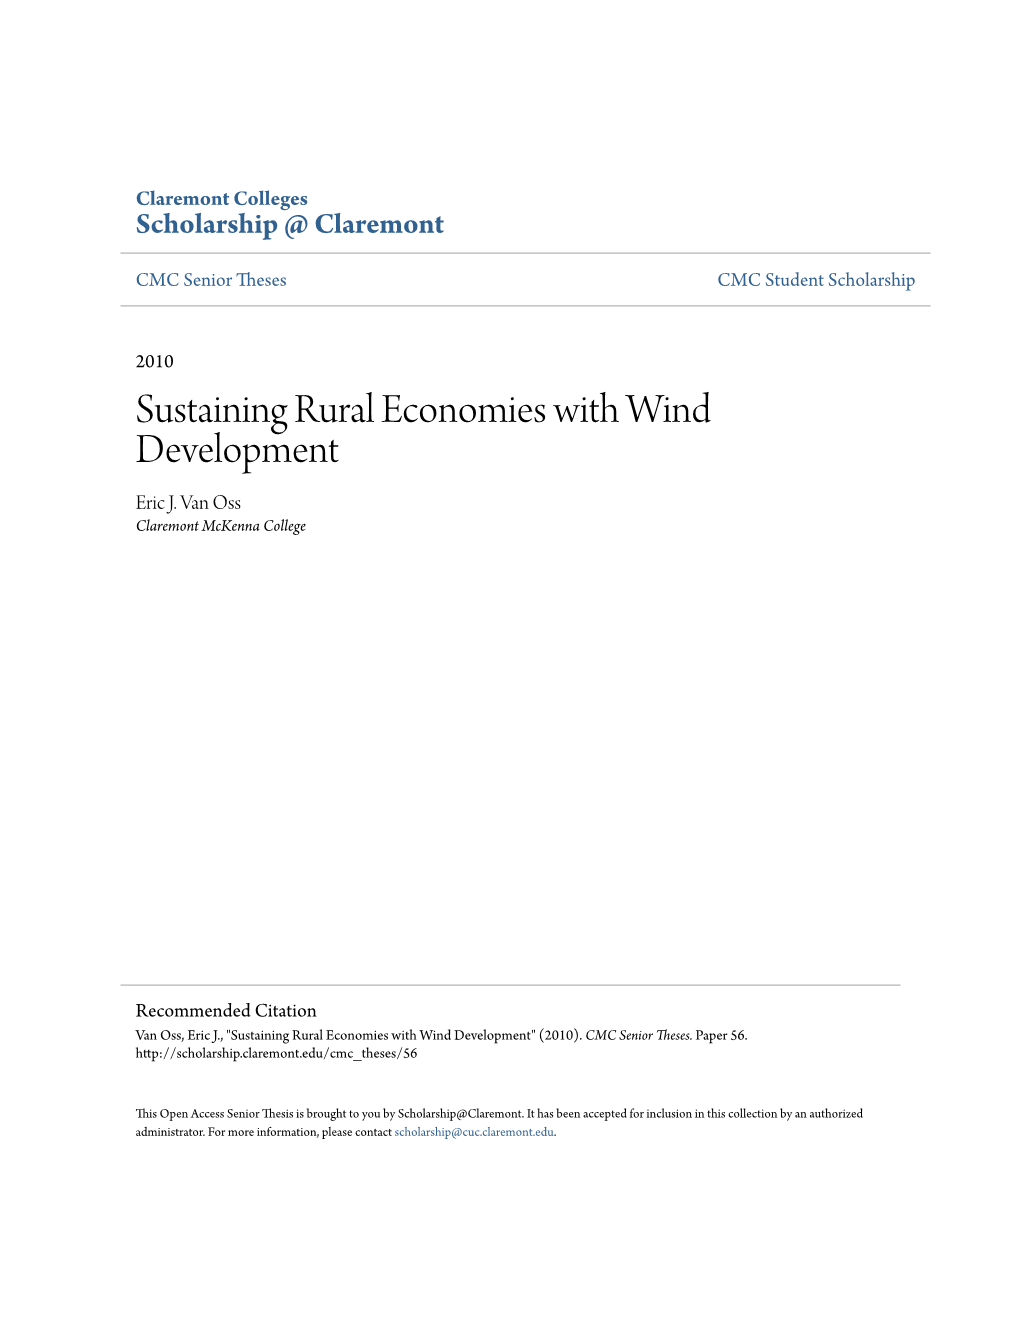 Sustaining Rural Economies with Wind Development Eric J